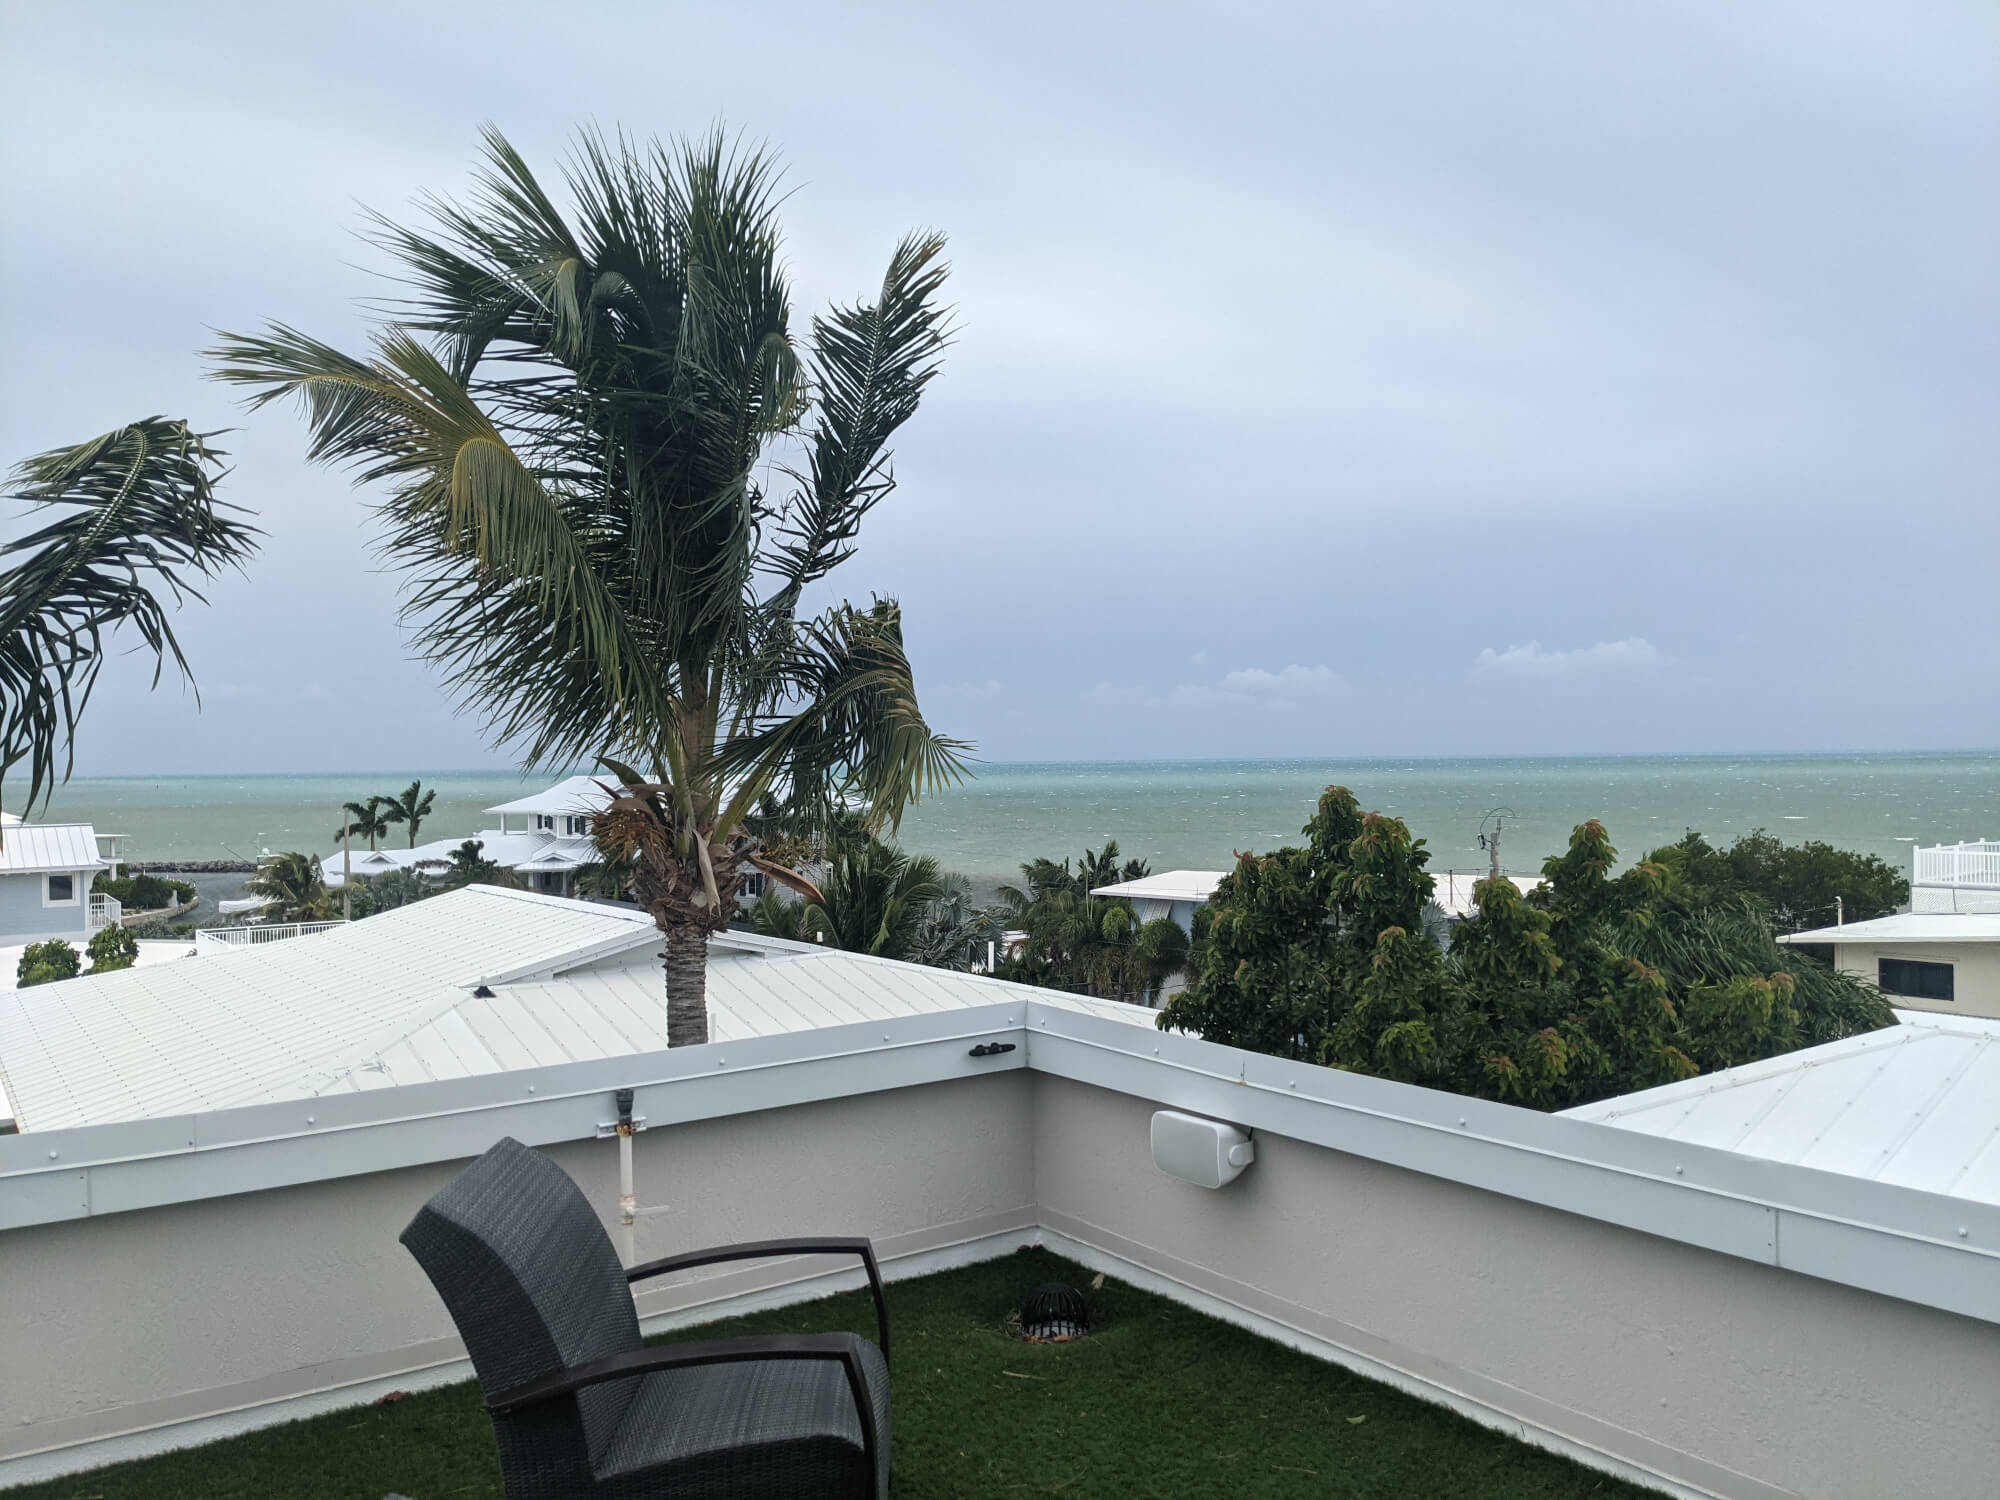 Travel Blog: Florida Keys